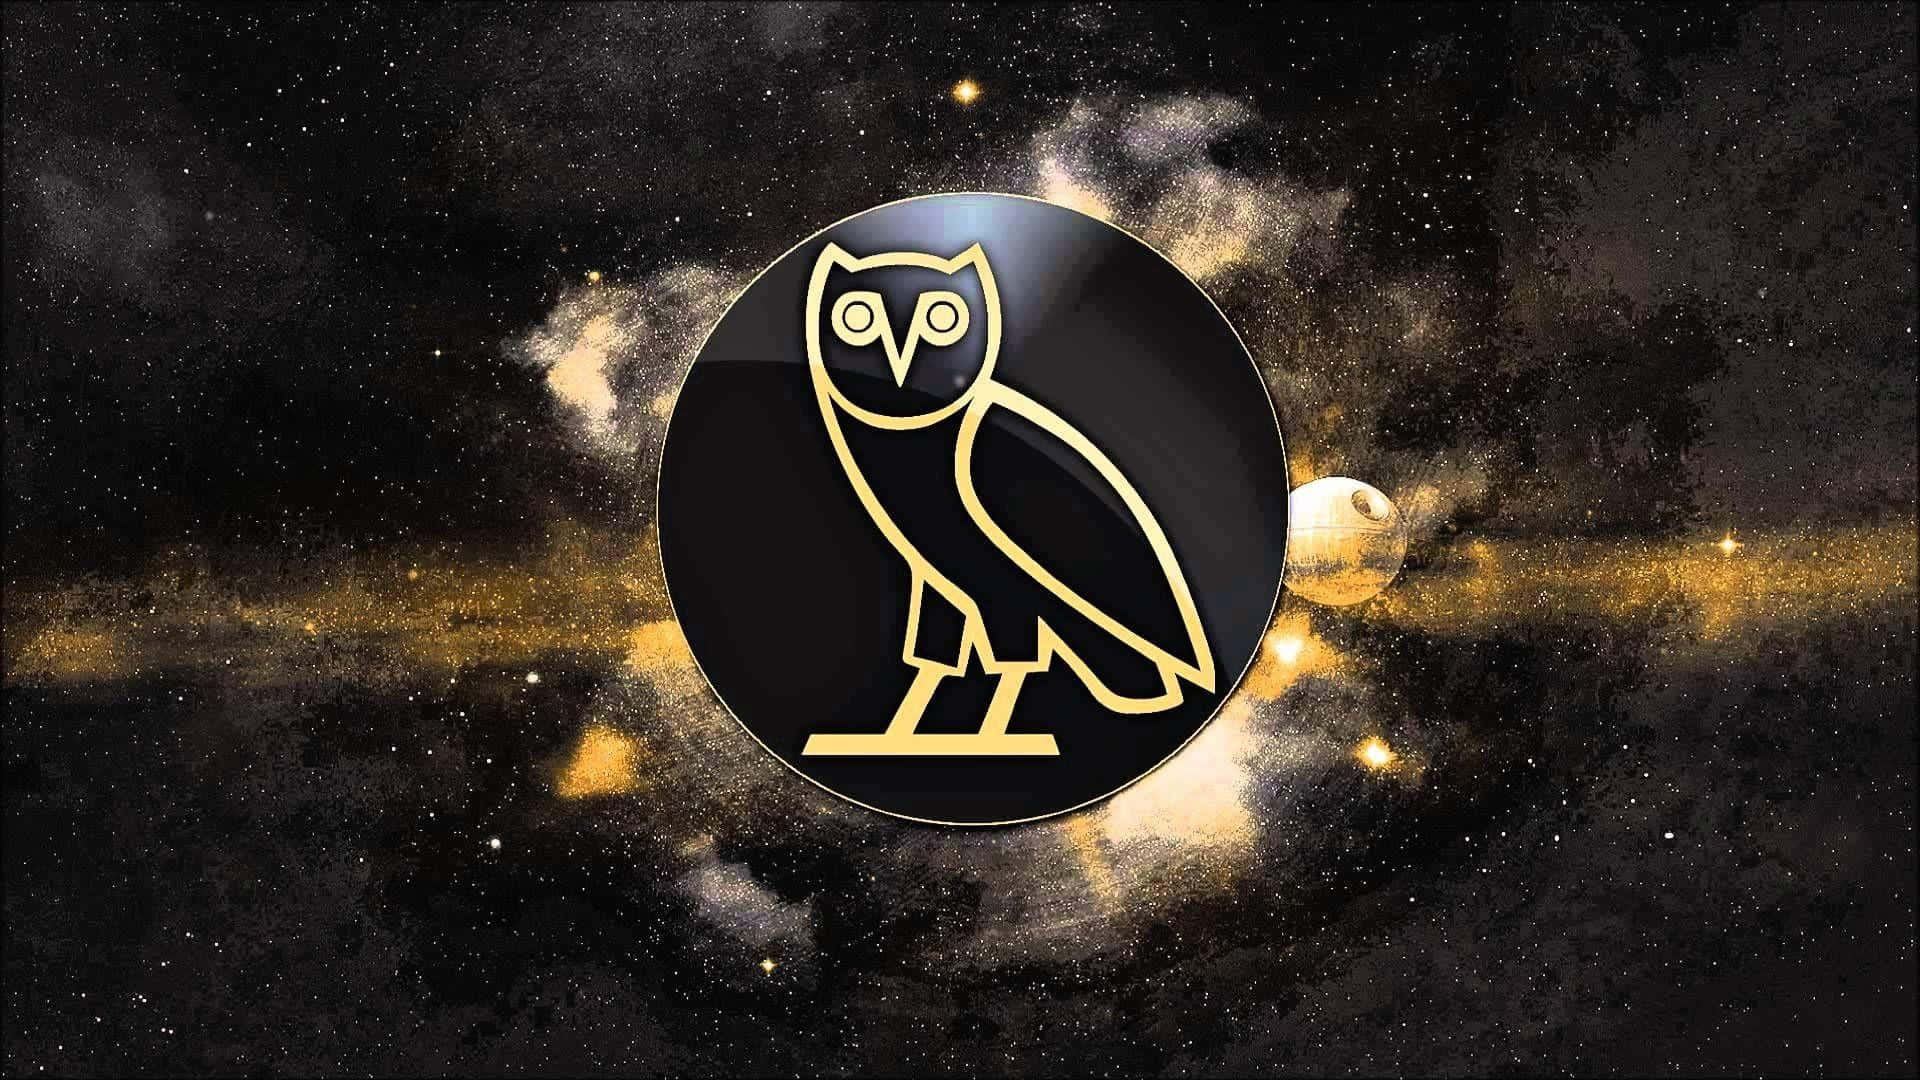 Drake Owl Ovo Ultra HD Desktop Background Wallpaper for